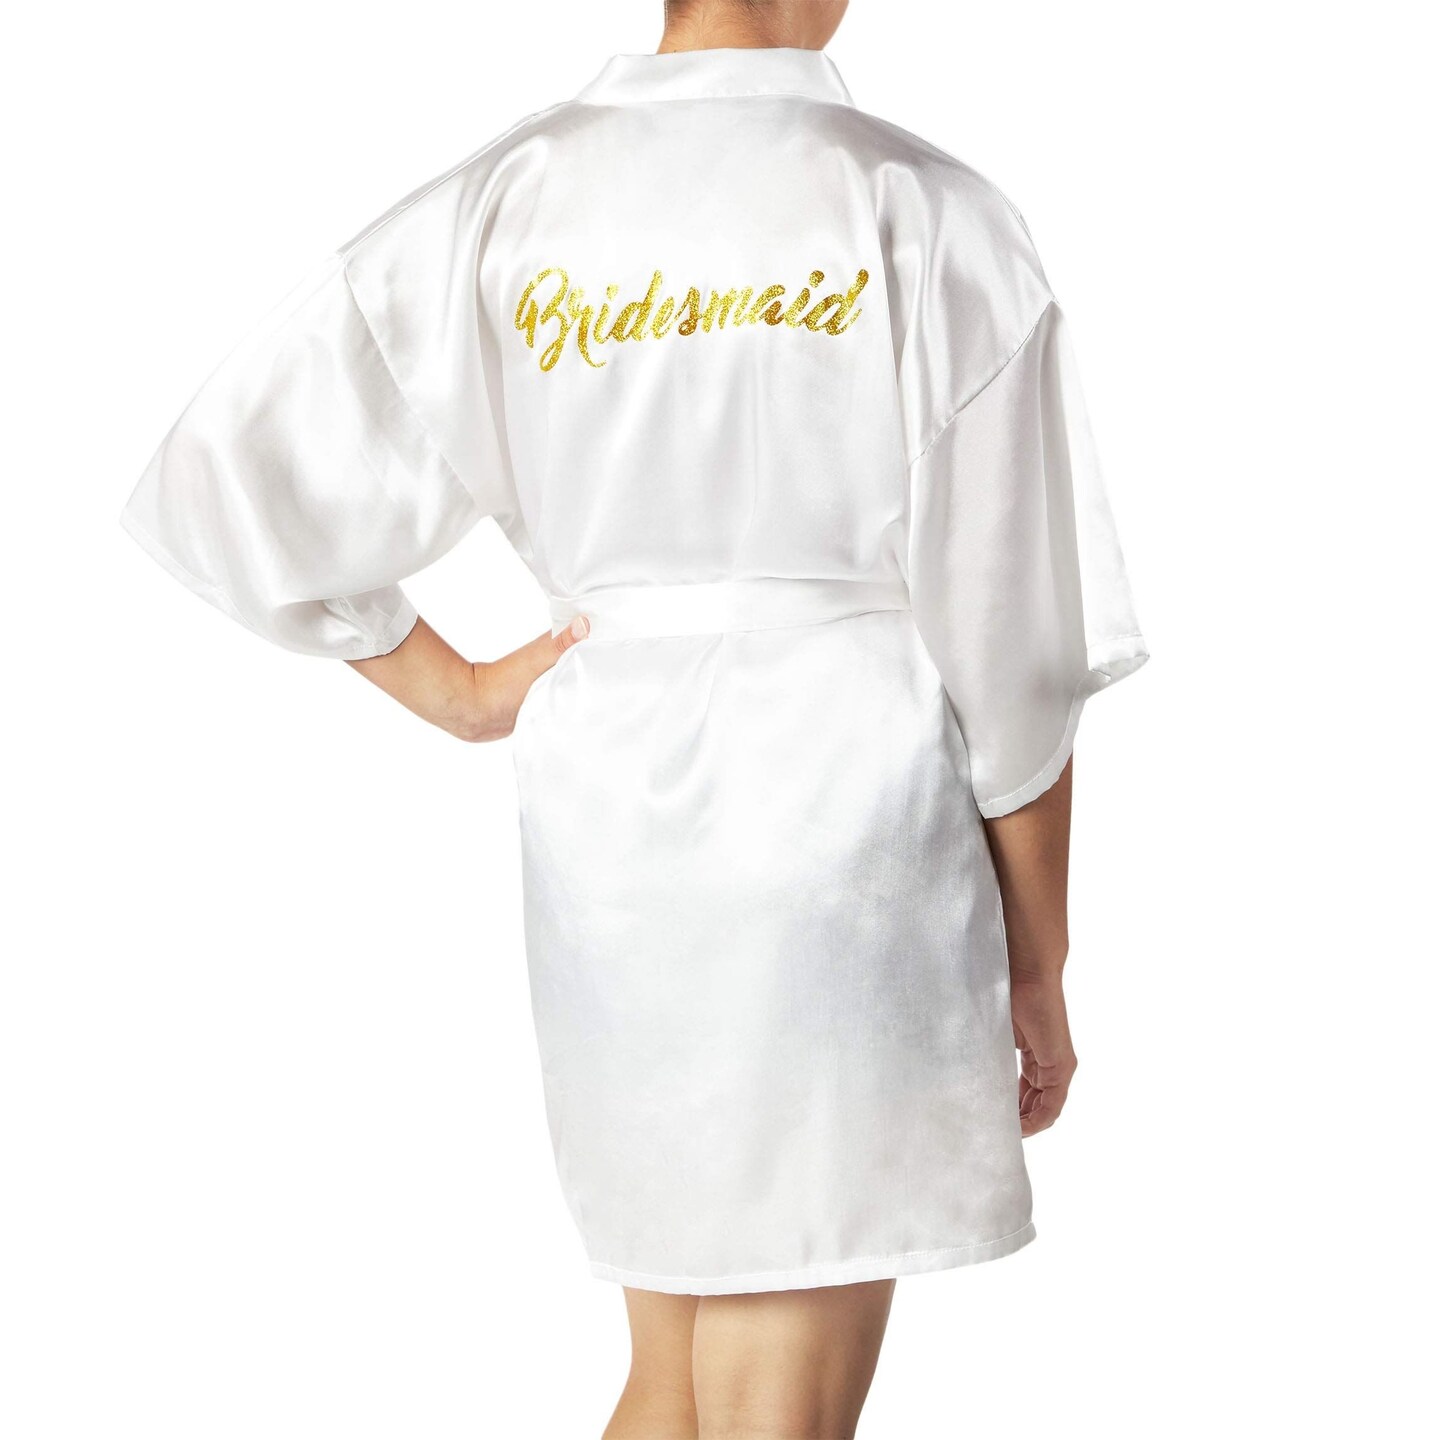 Sparkle and Bash White Satin Kimono Robes for Bridesmaid, Bachelorette Party Gifts (XL)